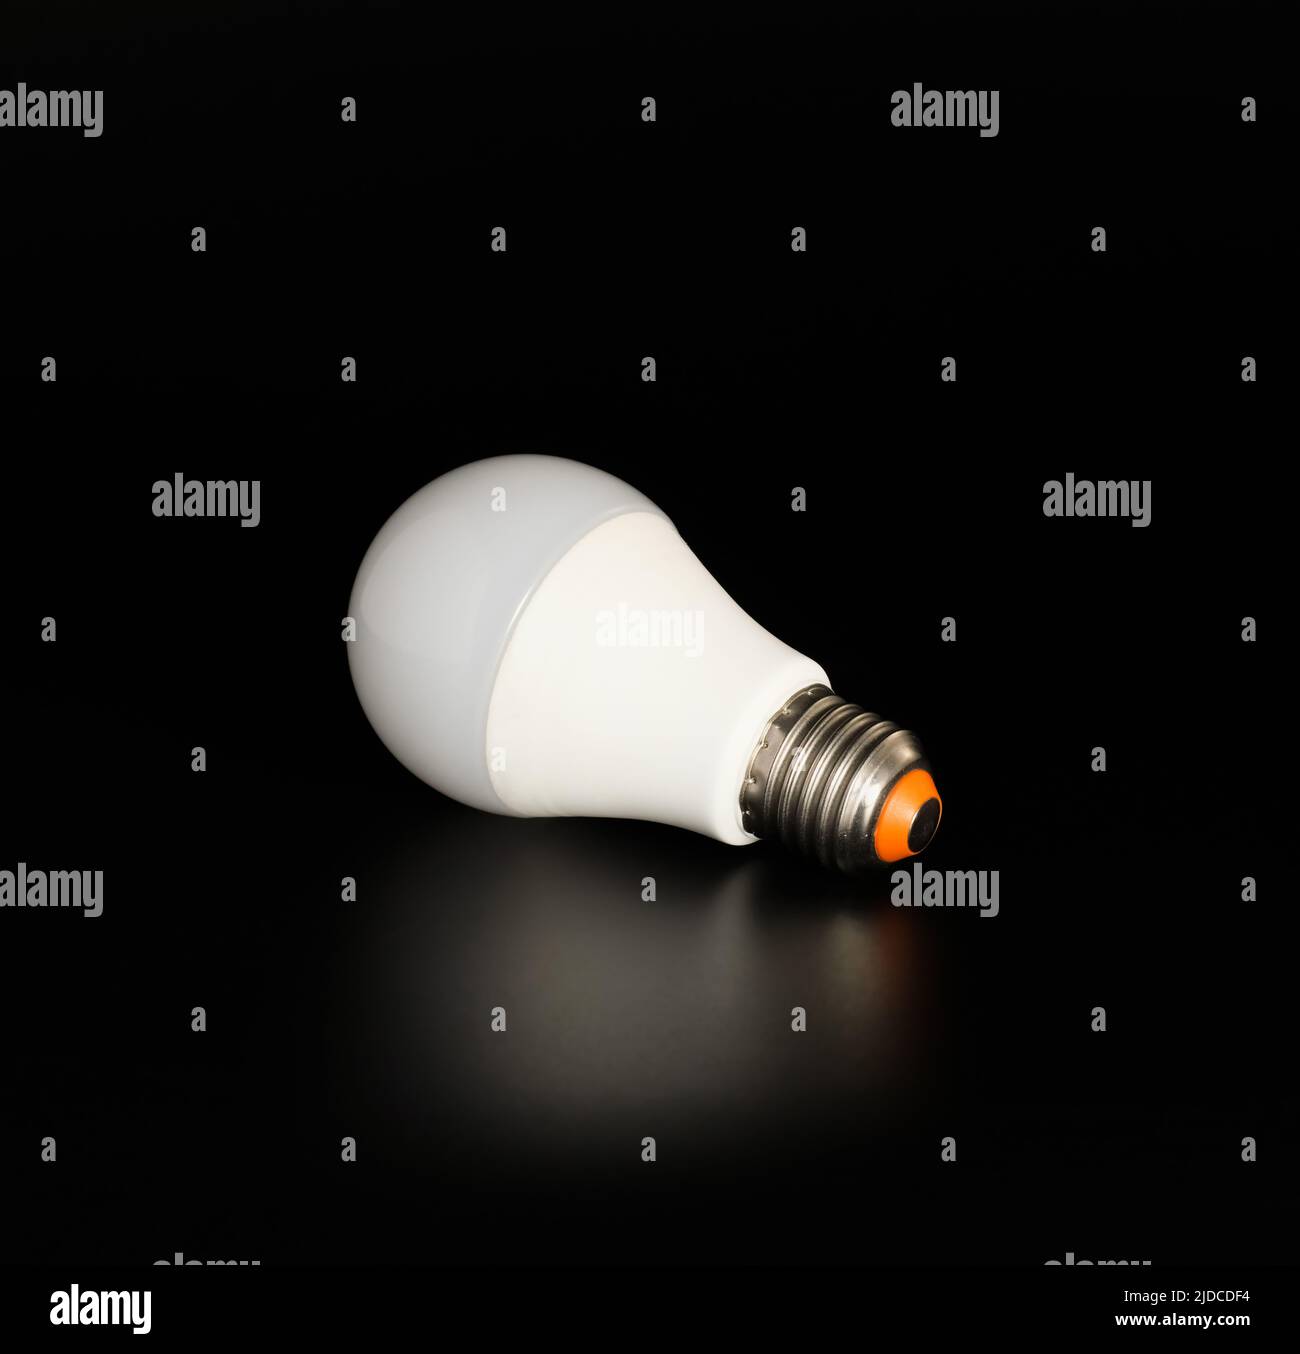 Economical LED light bulb with reflection on a black background Stock Photo